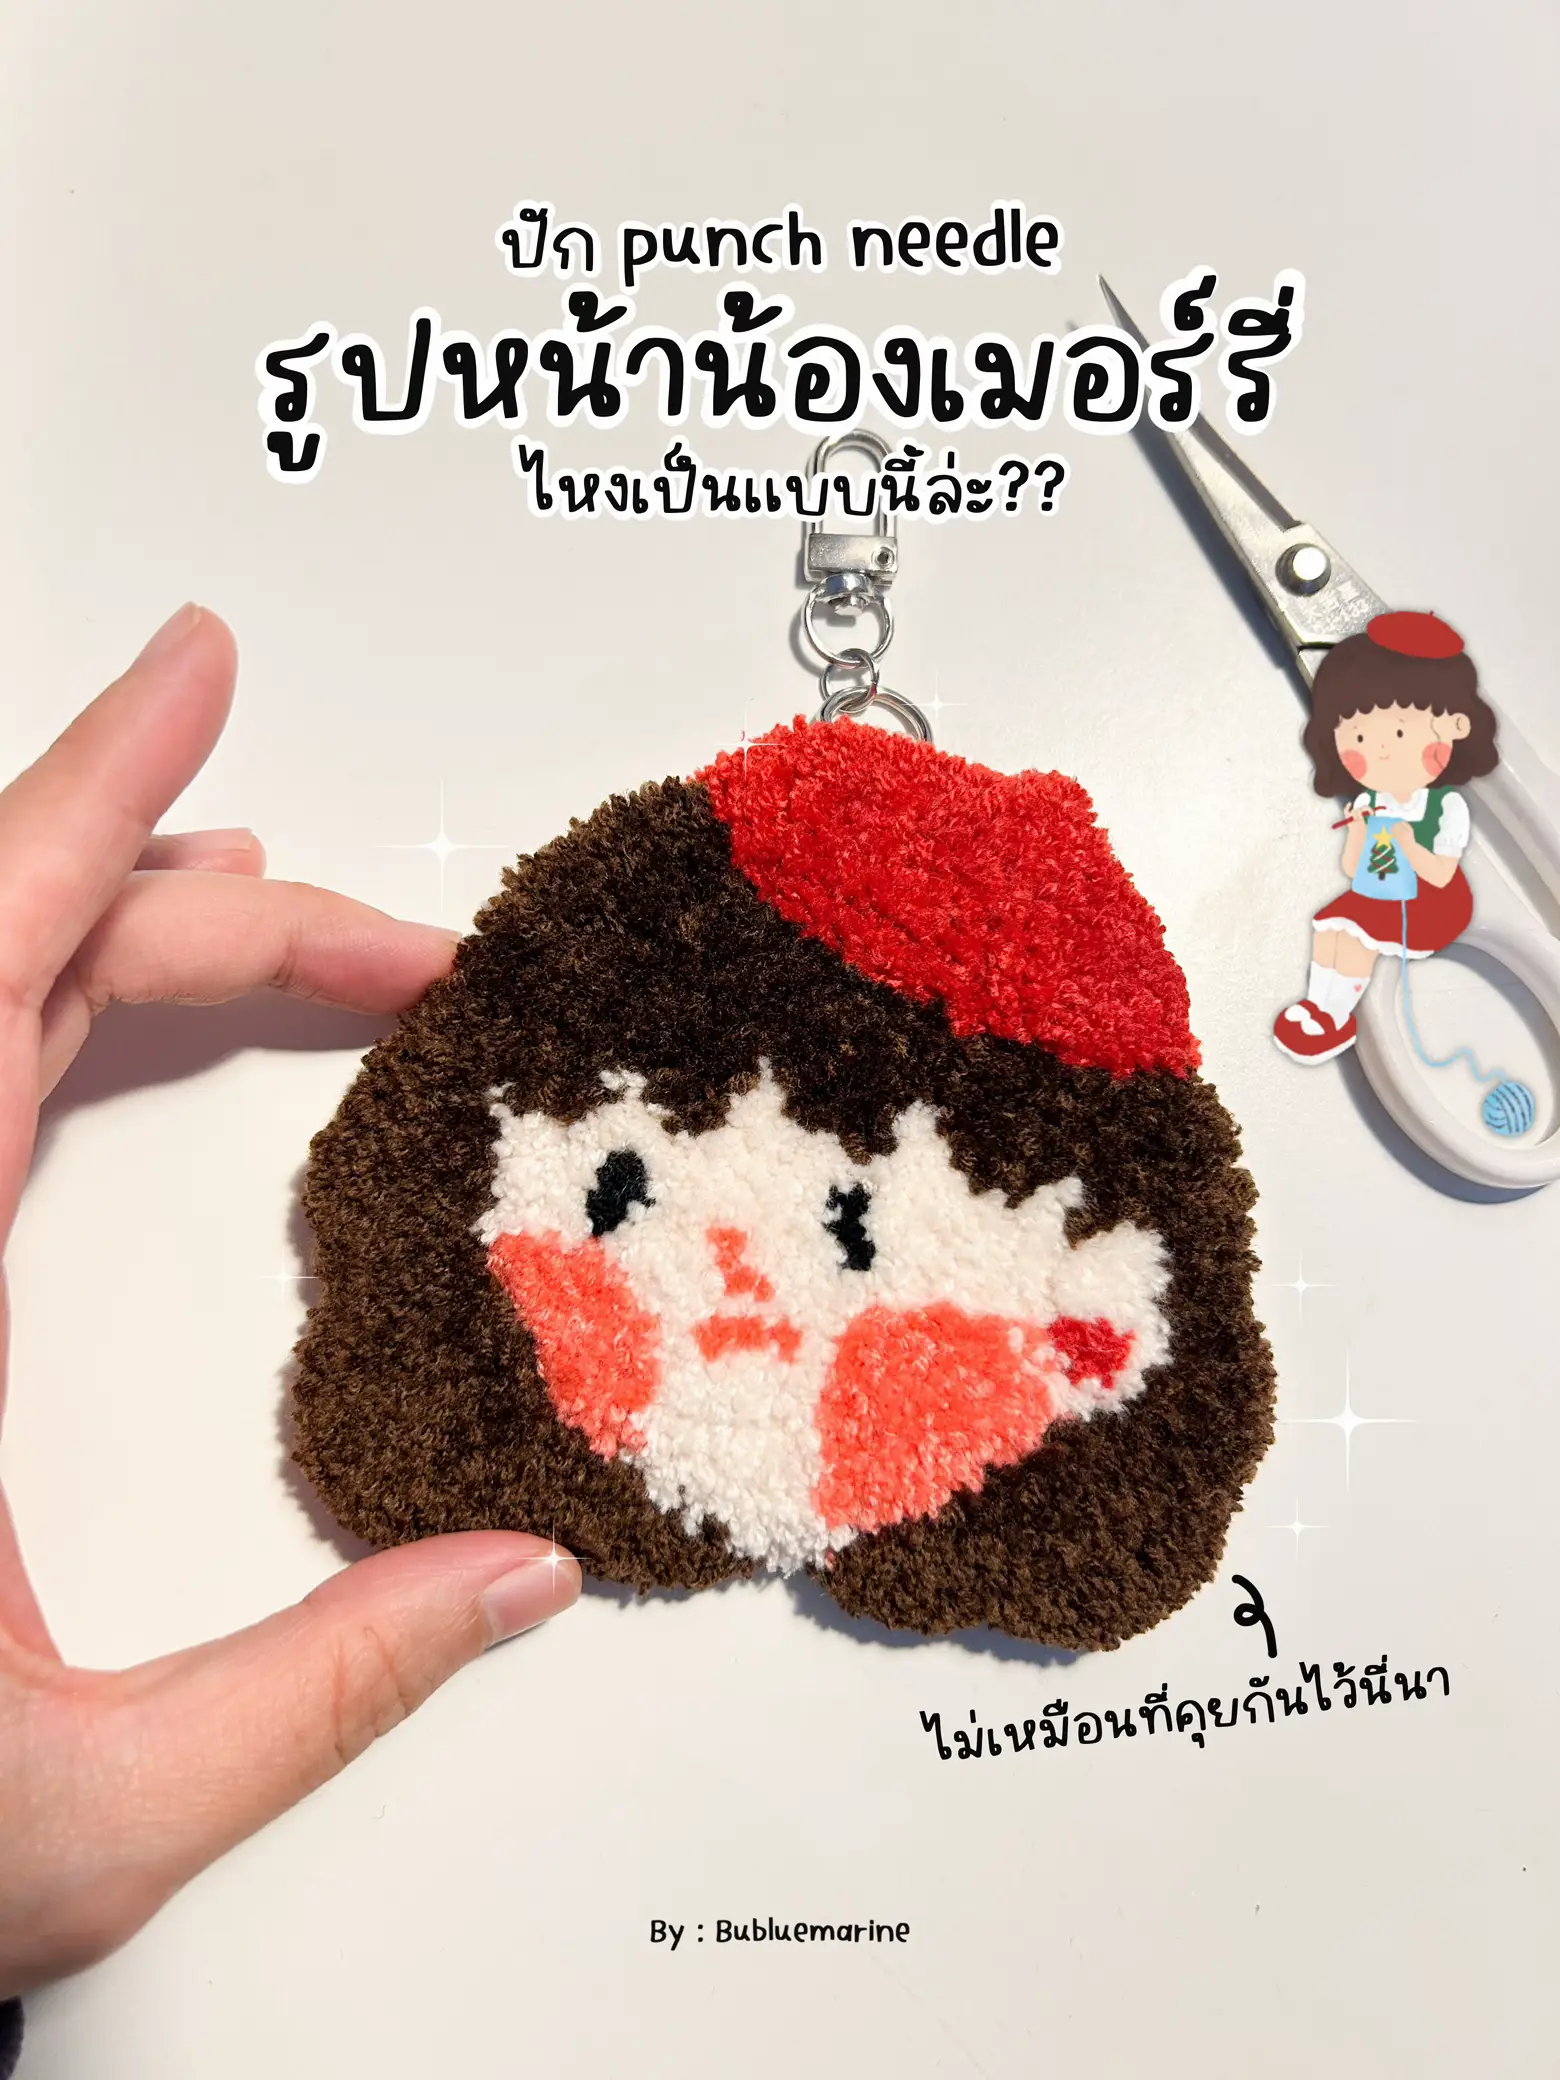 Japanese Cute Cartoon Own Design Punch Needle Coaster DIY Kit with Yar